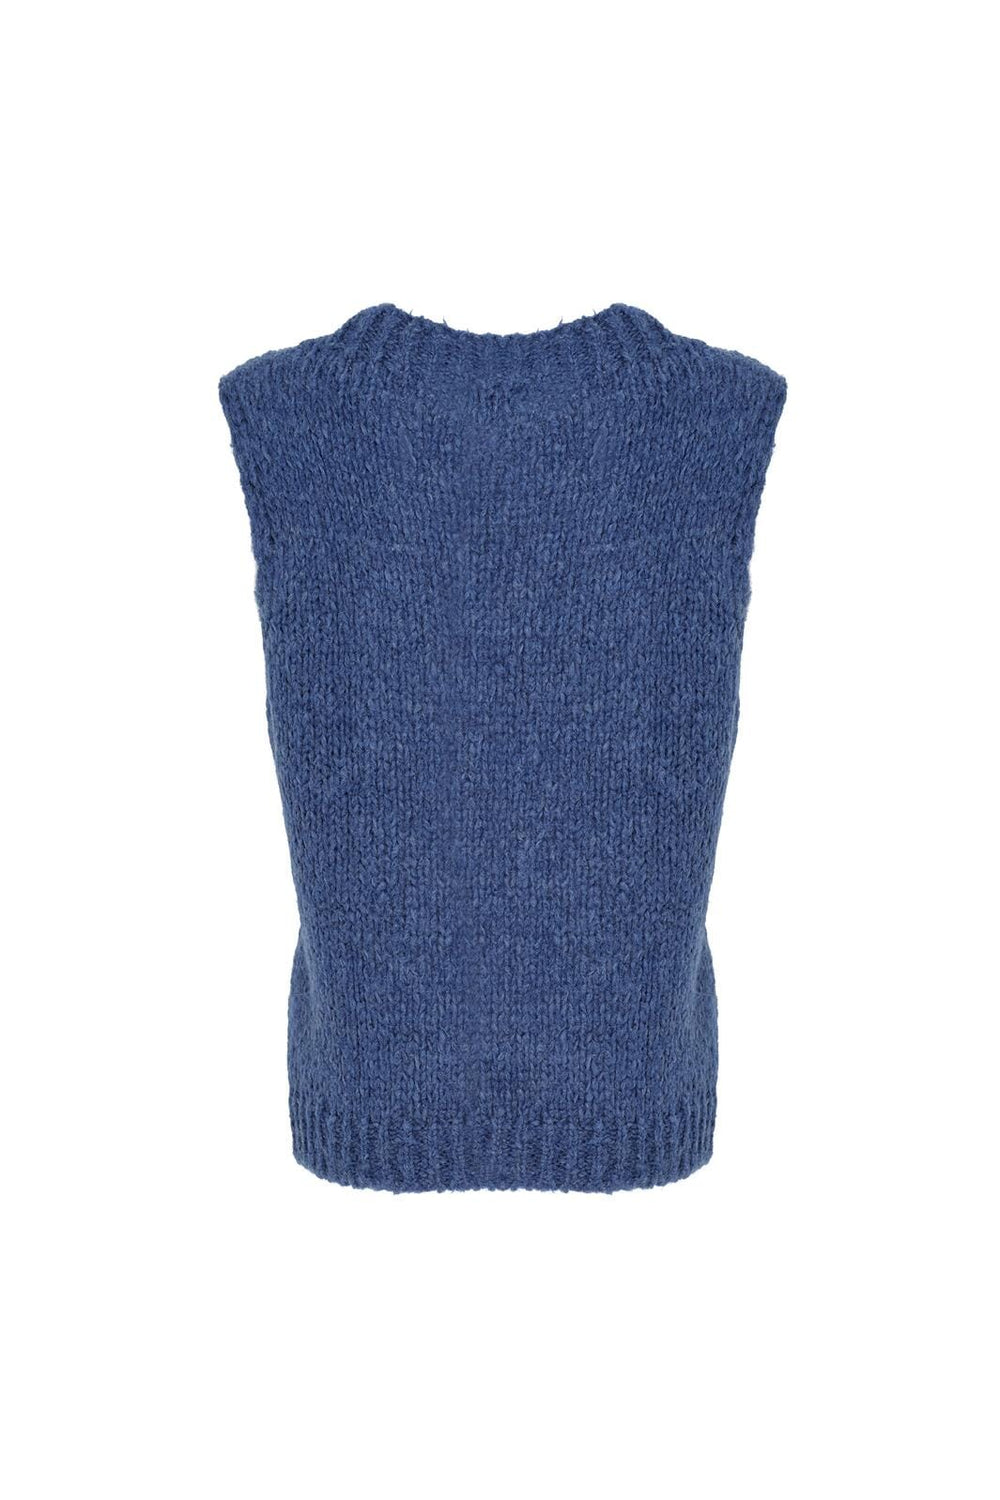 Noella - Kala Vest Wool - Denim Blue